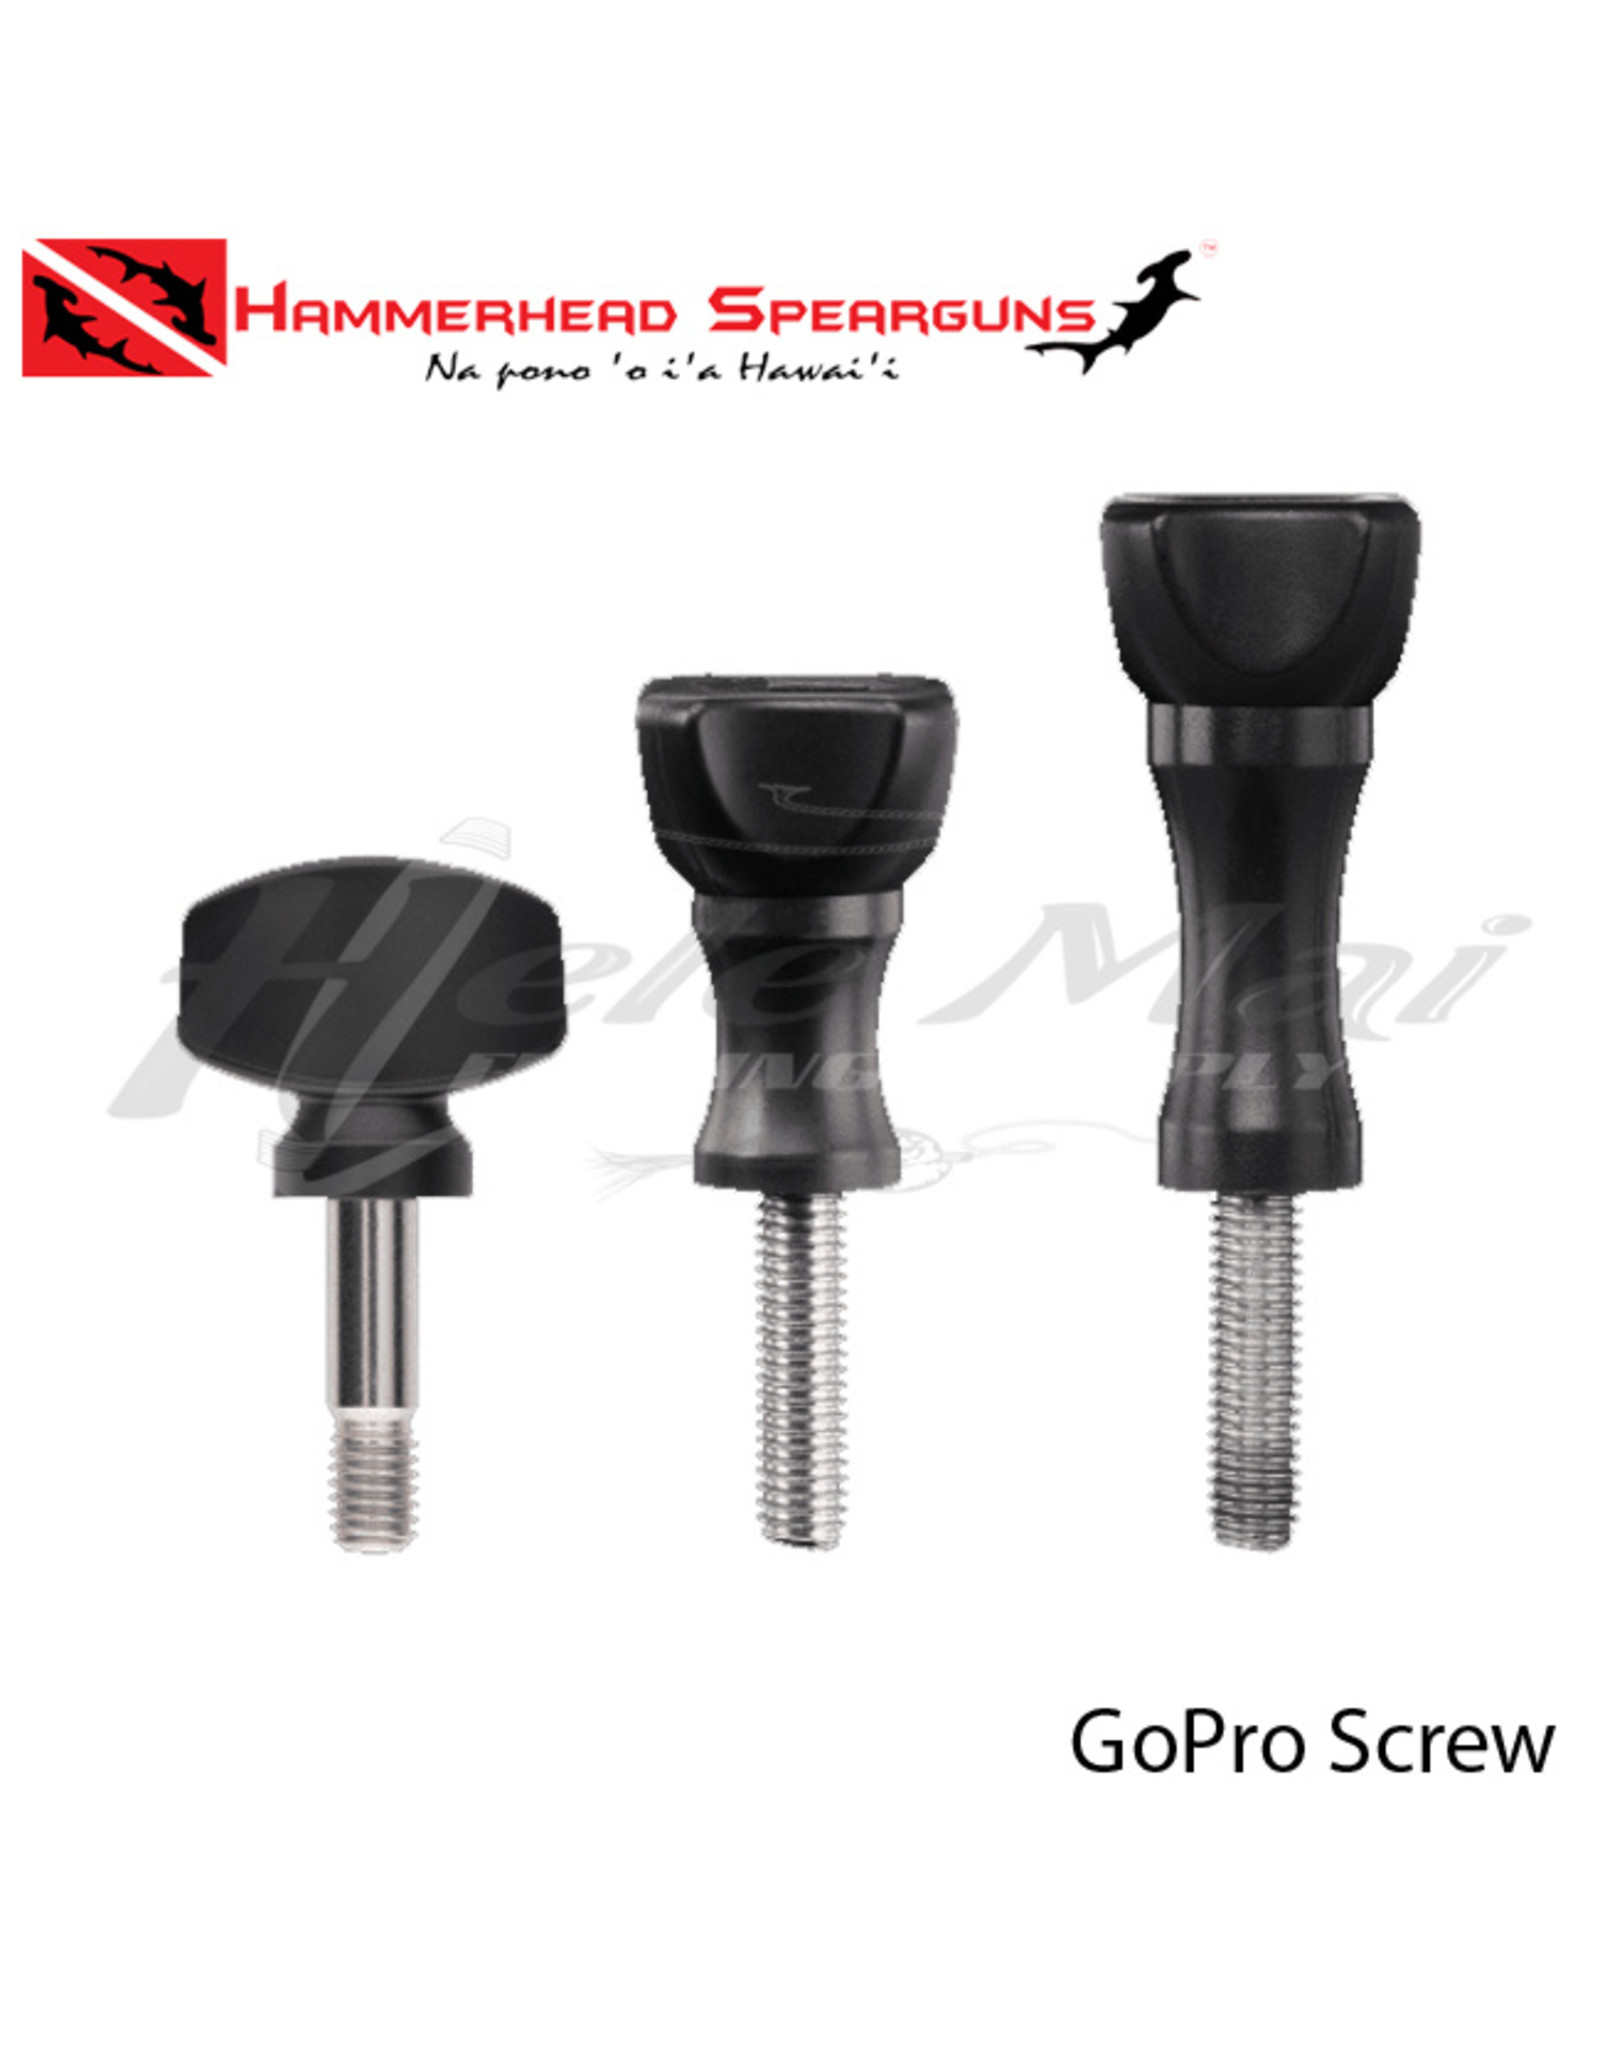 HAMMERHEAD SPEARGUNS GoPro Screw, Black